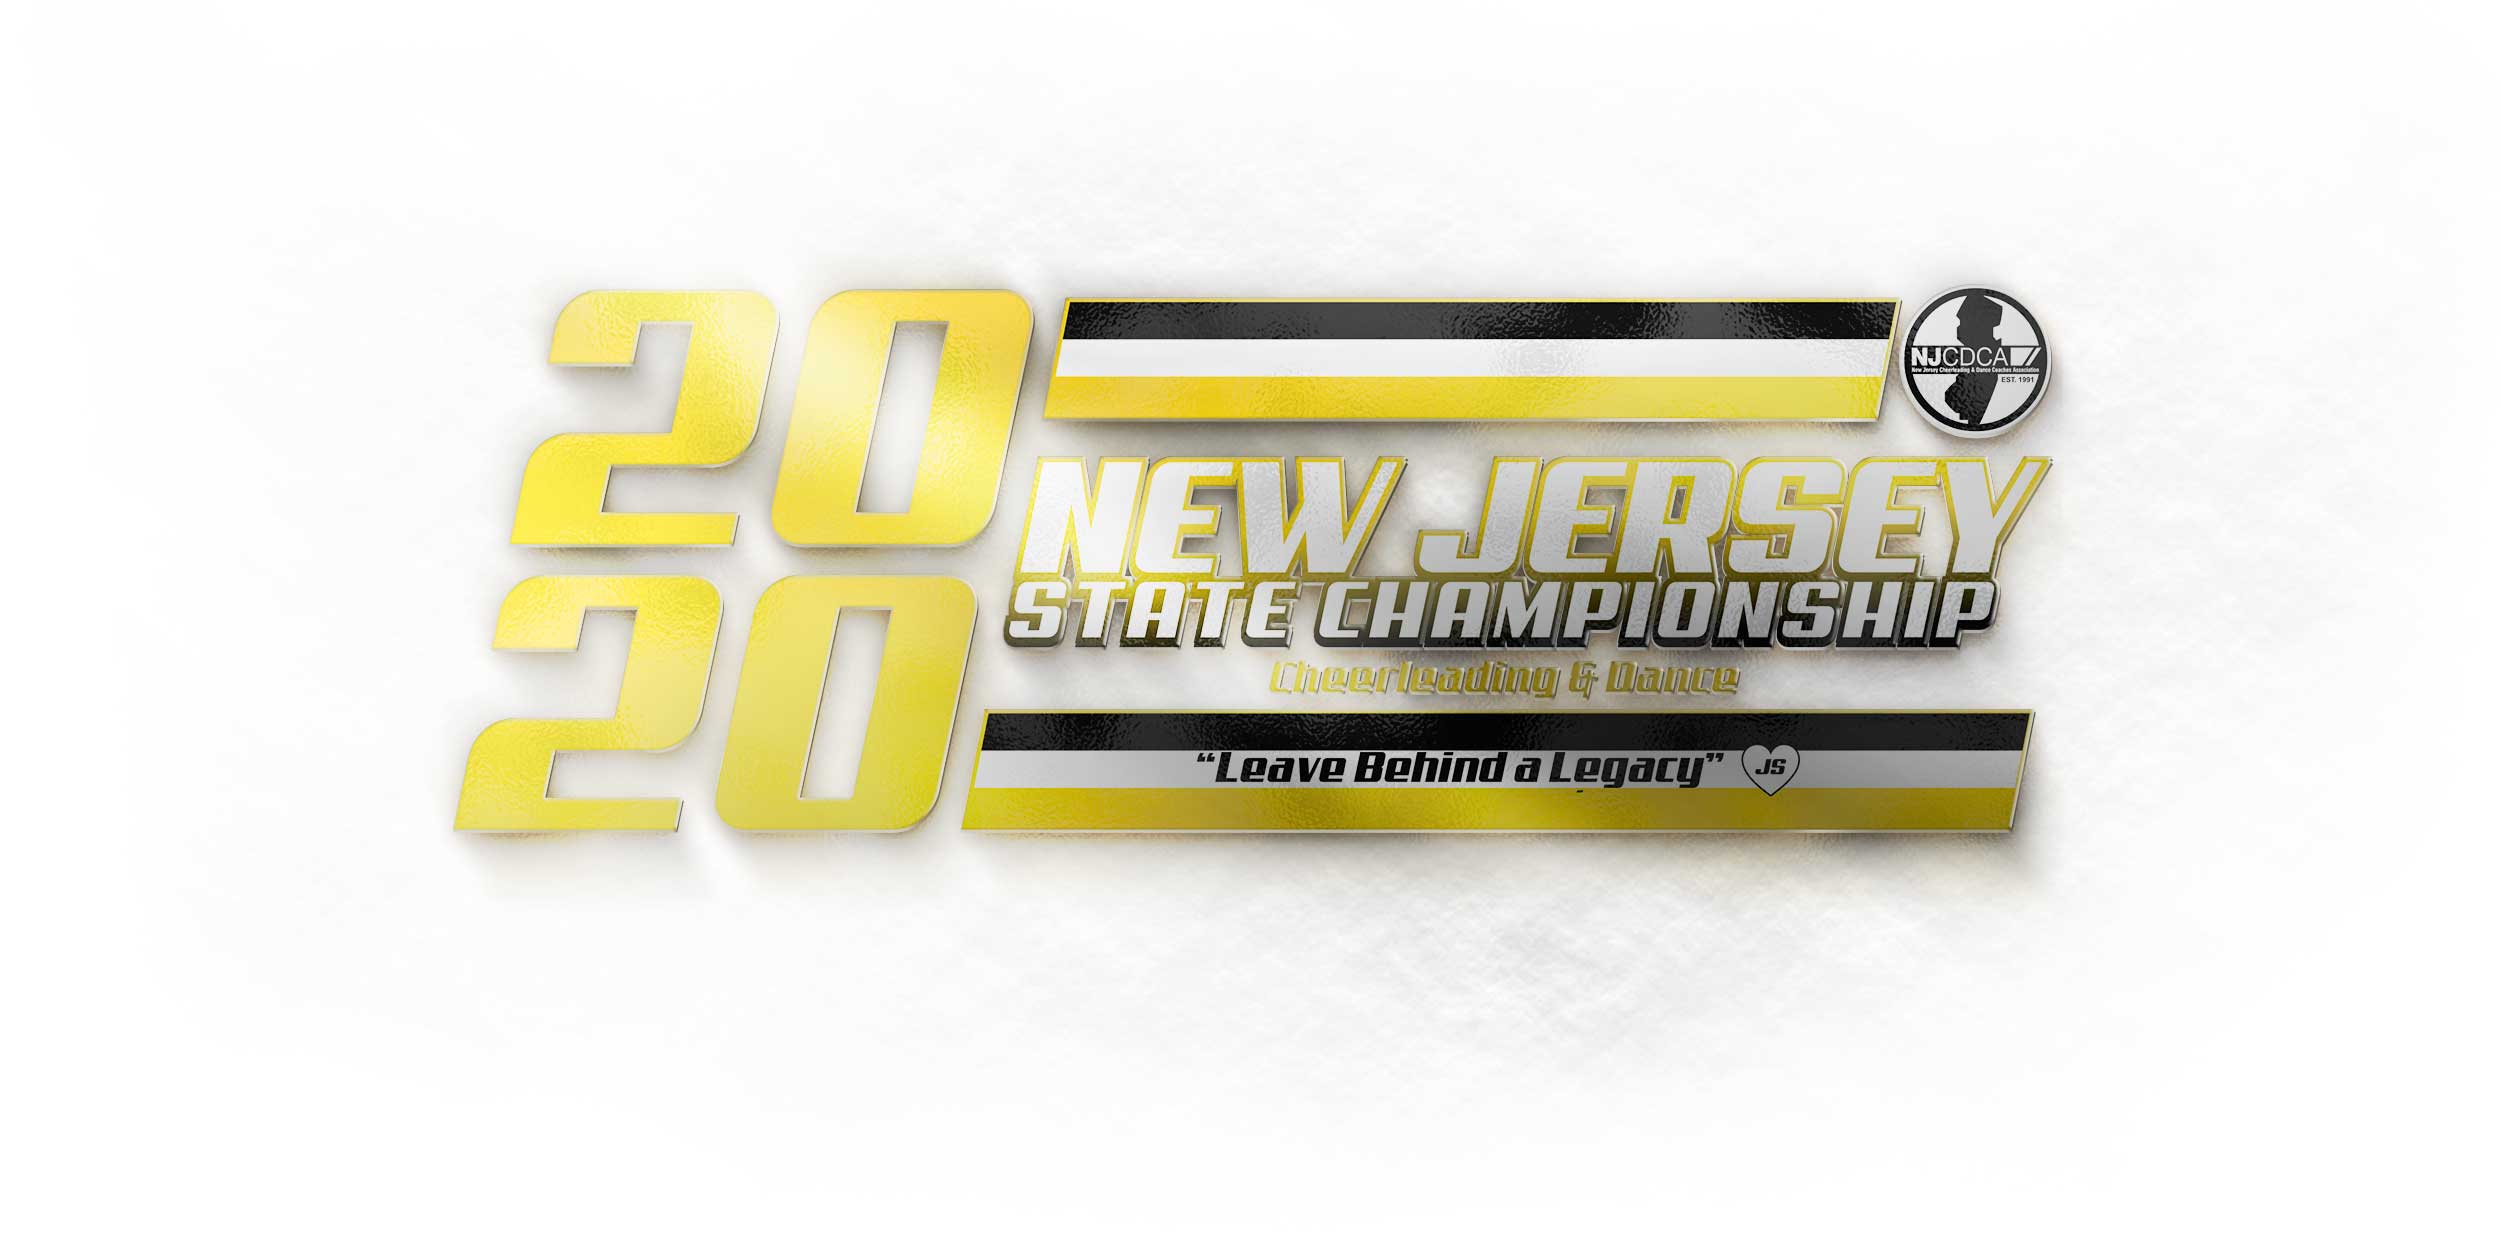 New-Jersey-State-championship